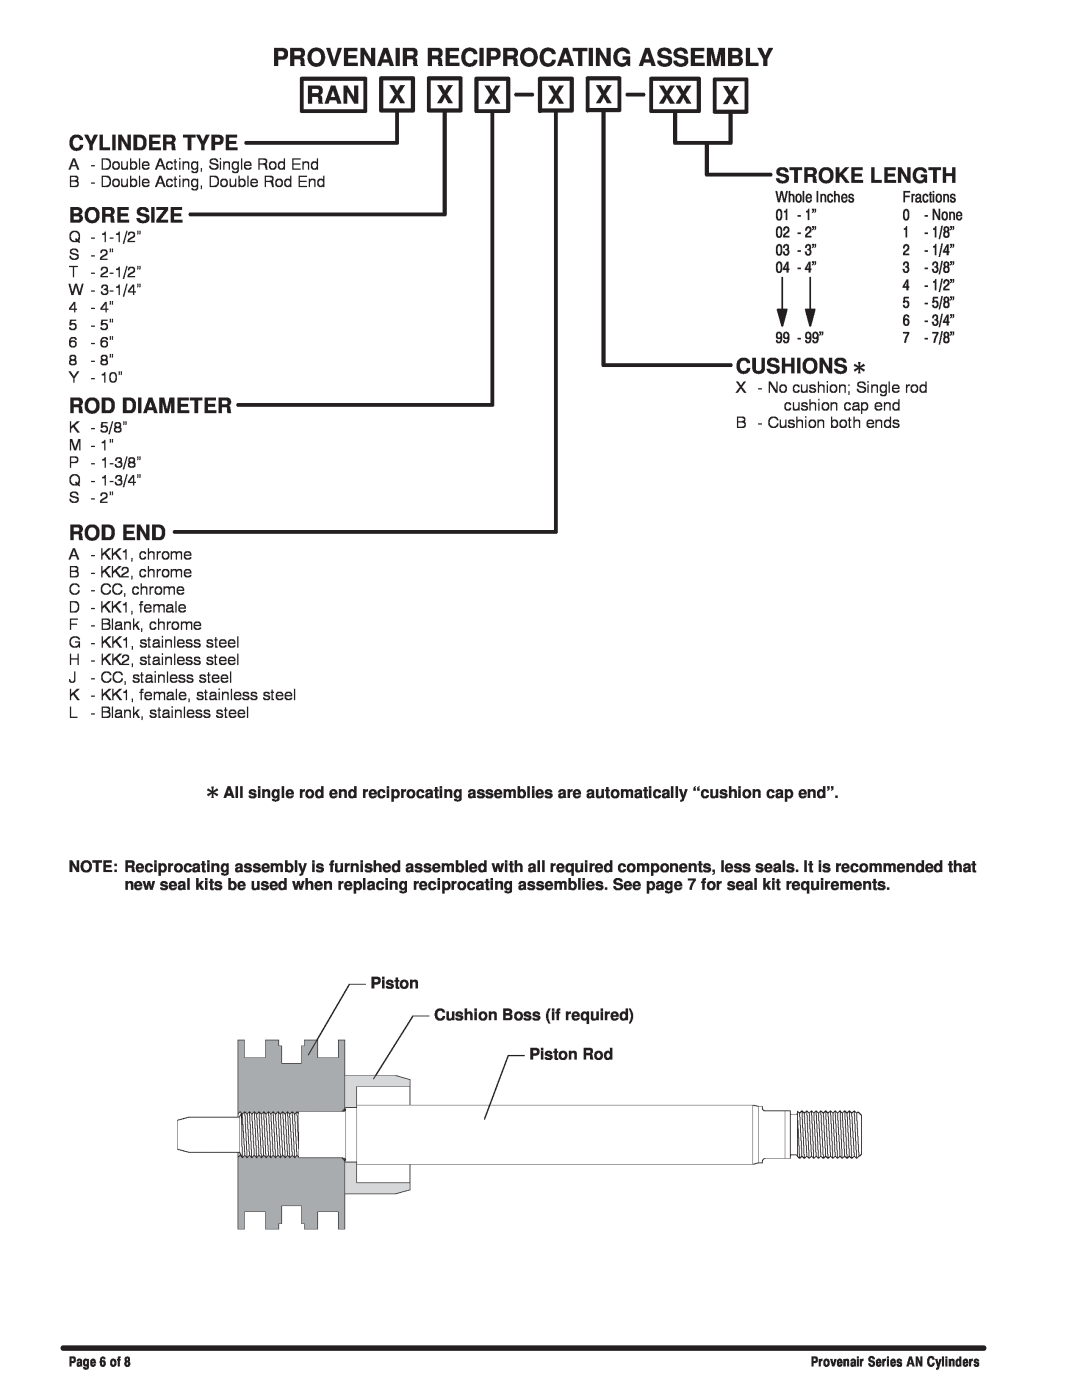 Ingersoll-Rand 2-1/2 Provenair Reciprocating Assembly Ran X X X X X Xx, Cushions Q, Cylinder Type, Bore Size, Rod Diameter 